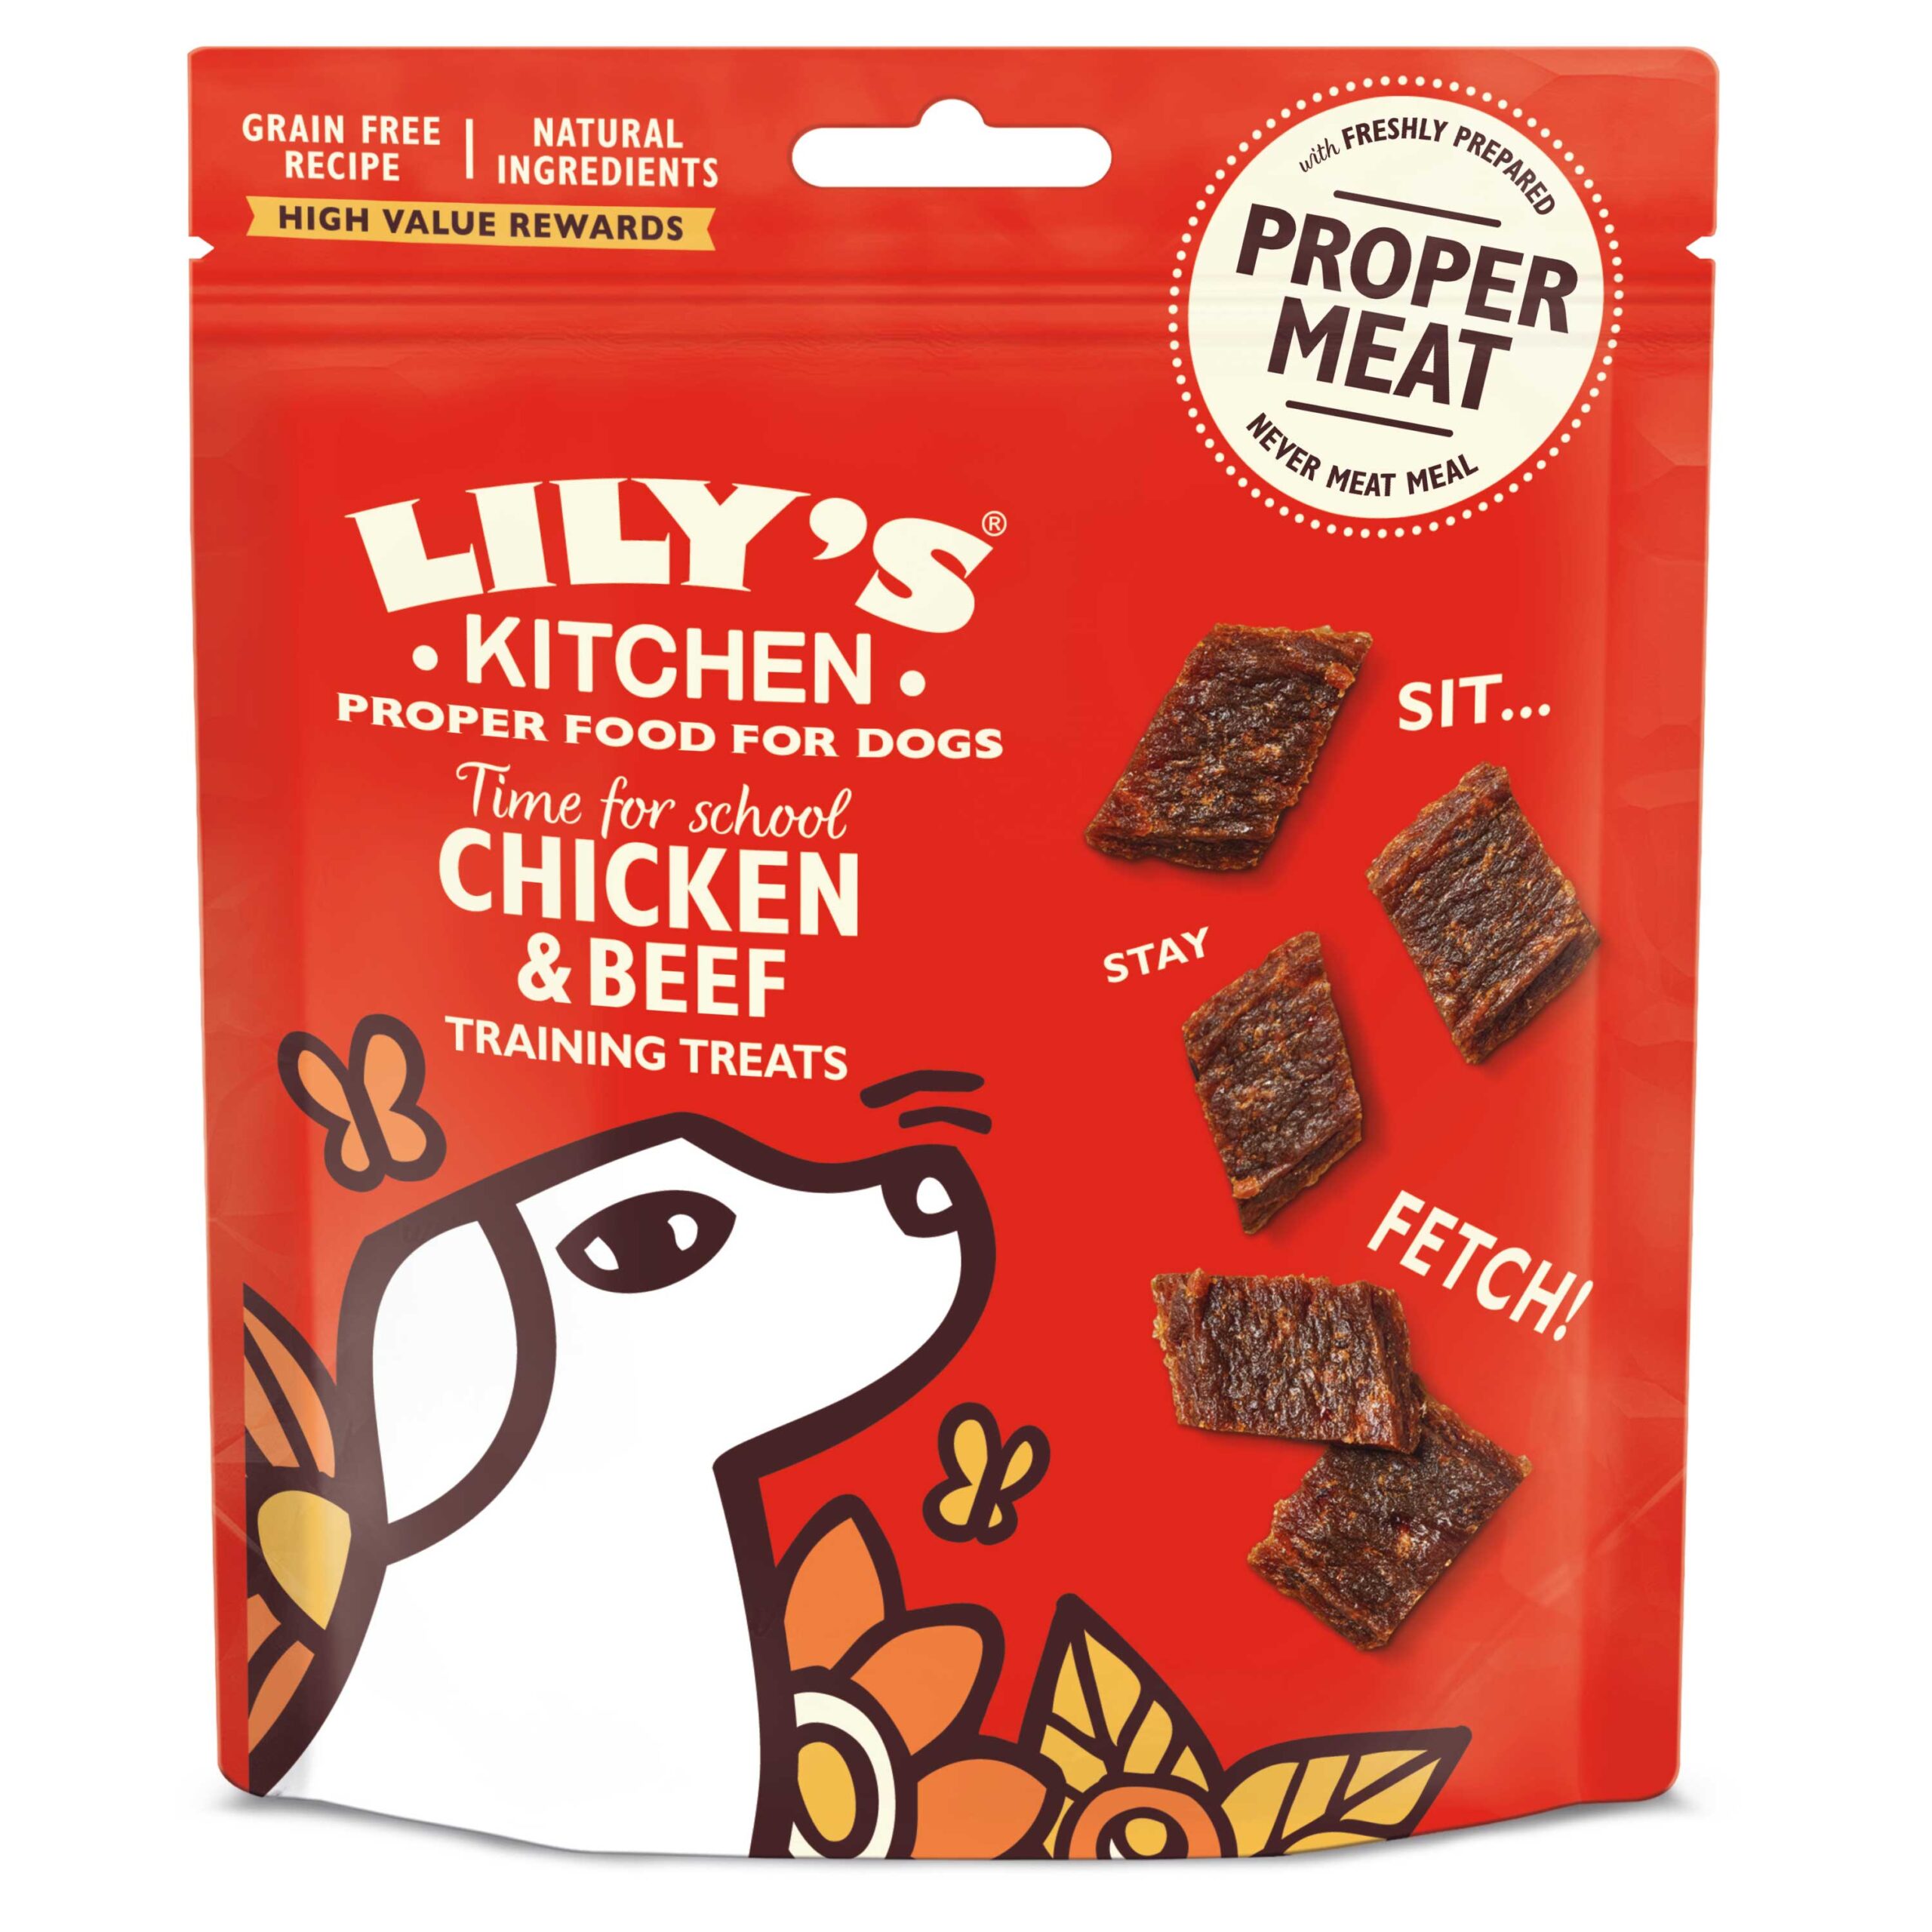 Lily’s Kitchen Dog Chicken & Beef Training Treats